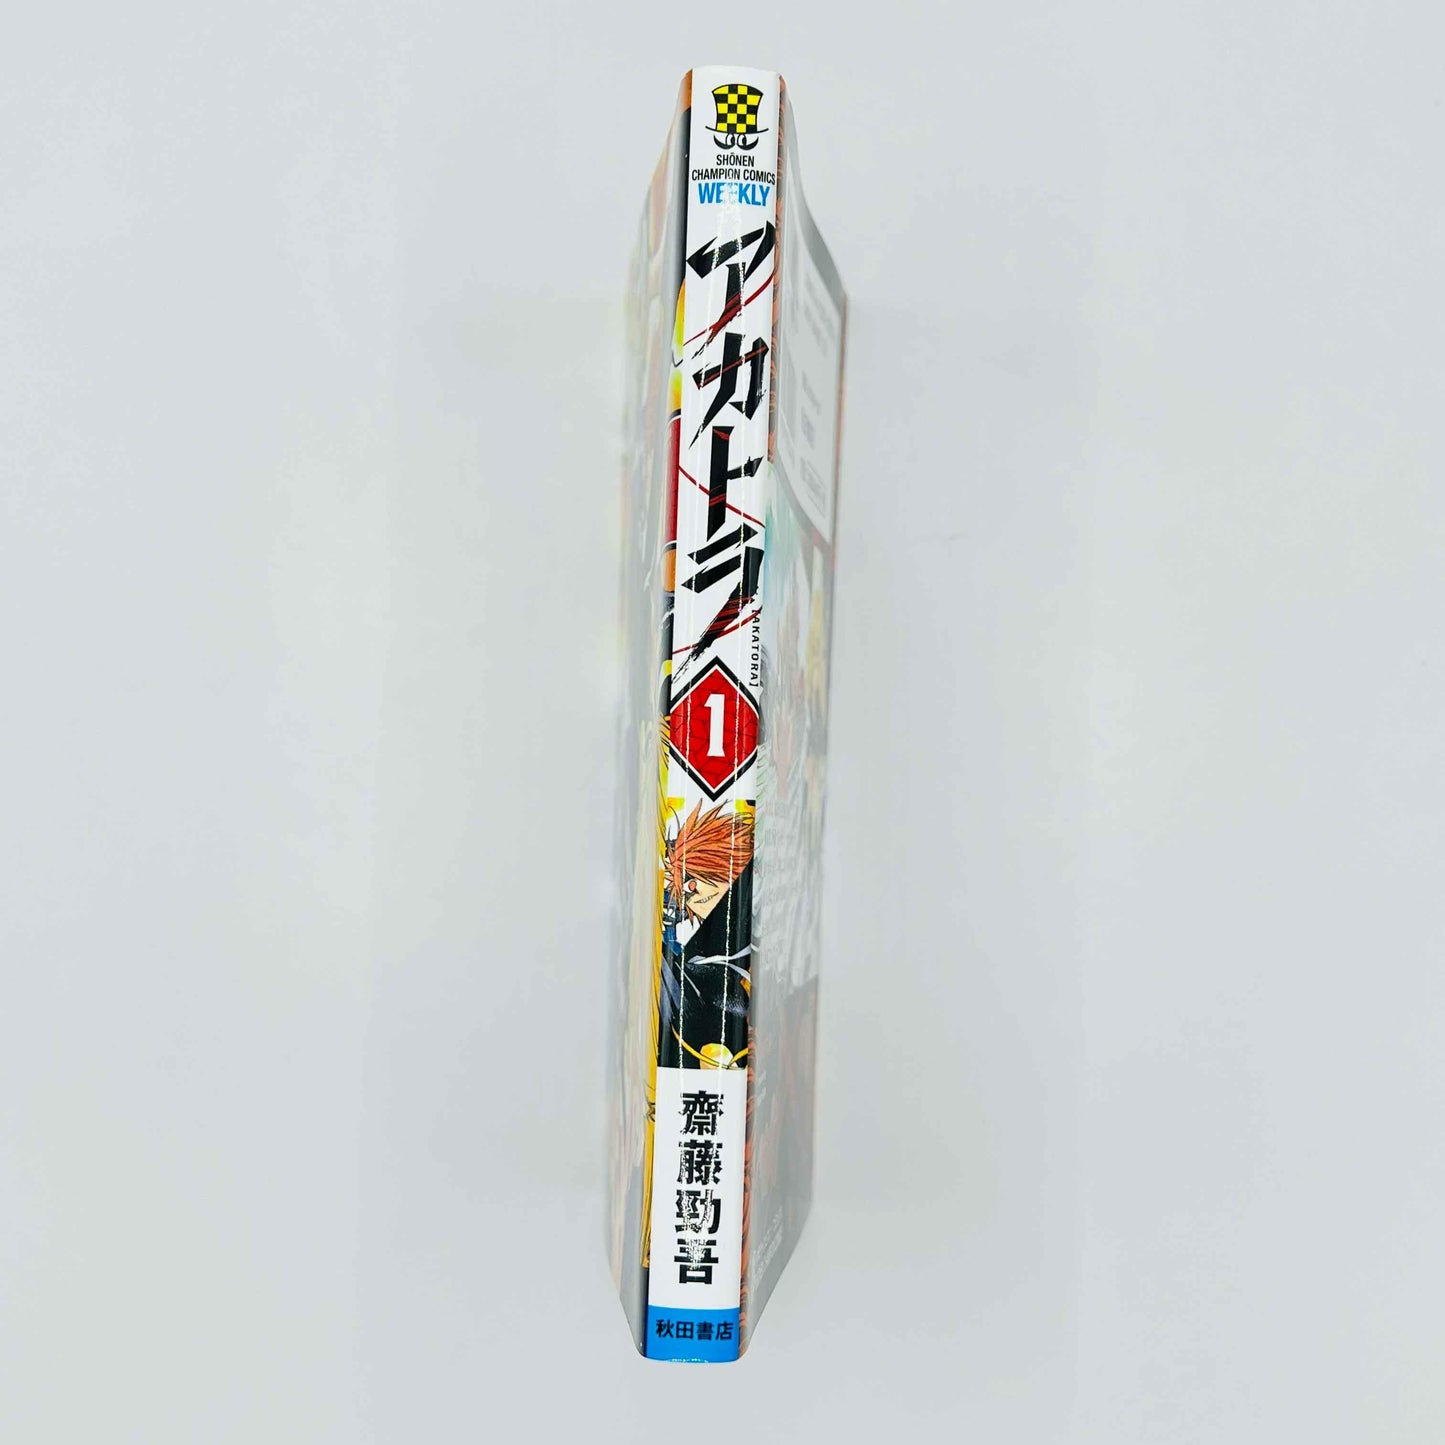 Akatora - Volume 01 - 1stPrint.net - 1st First Print Edition Manga Store - M-AKATORA-01-001